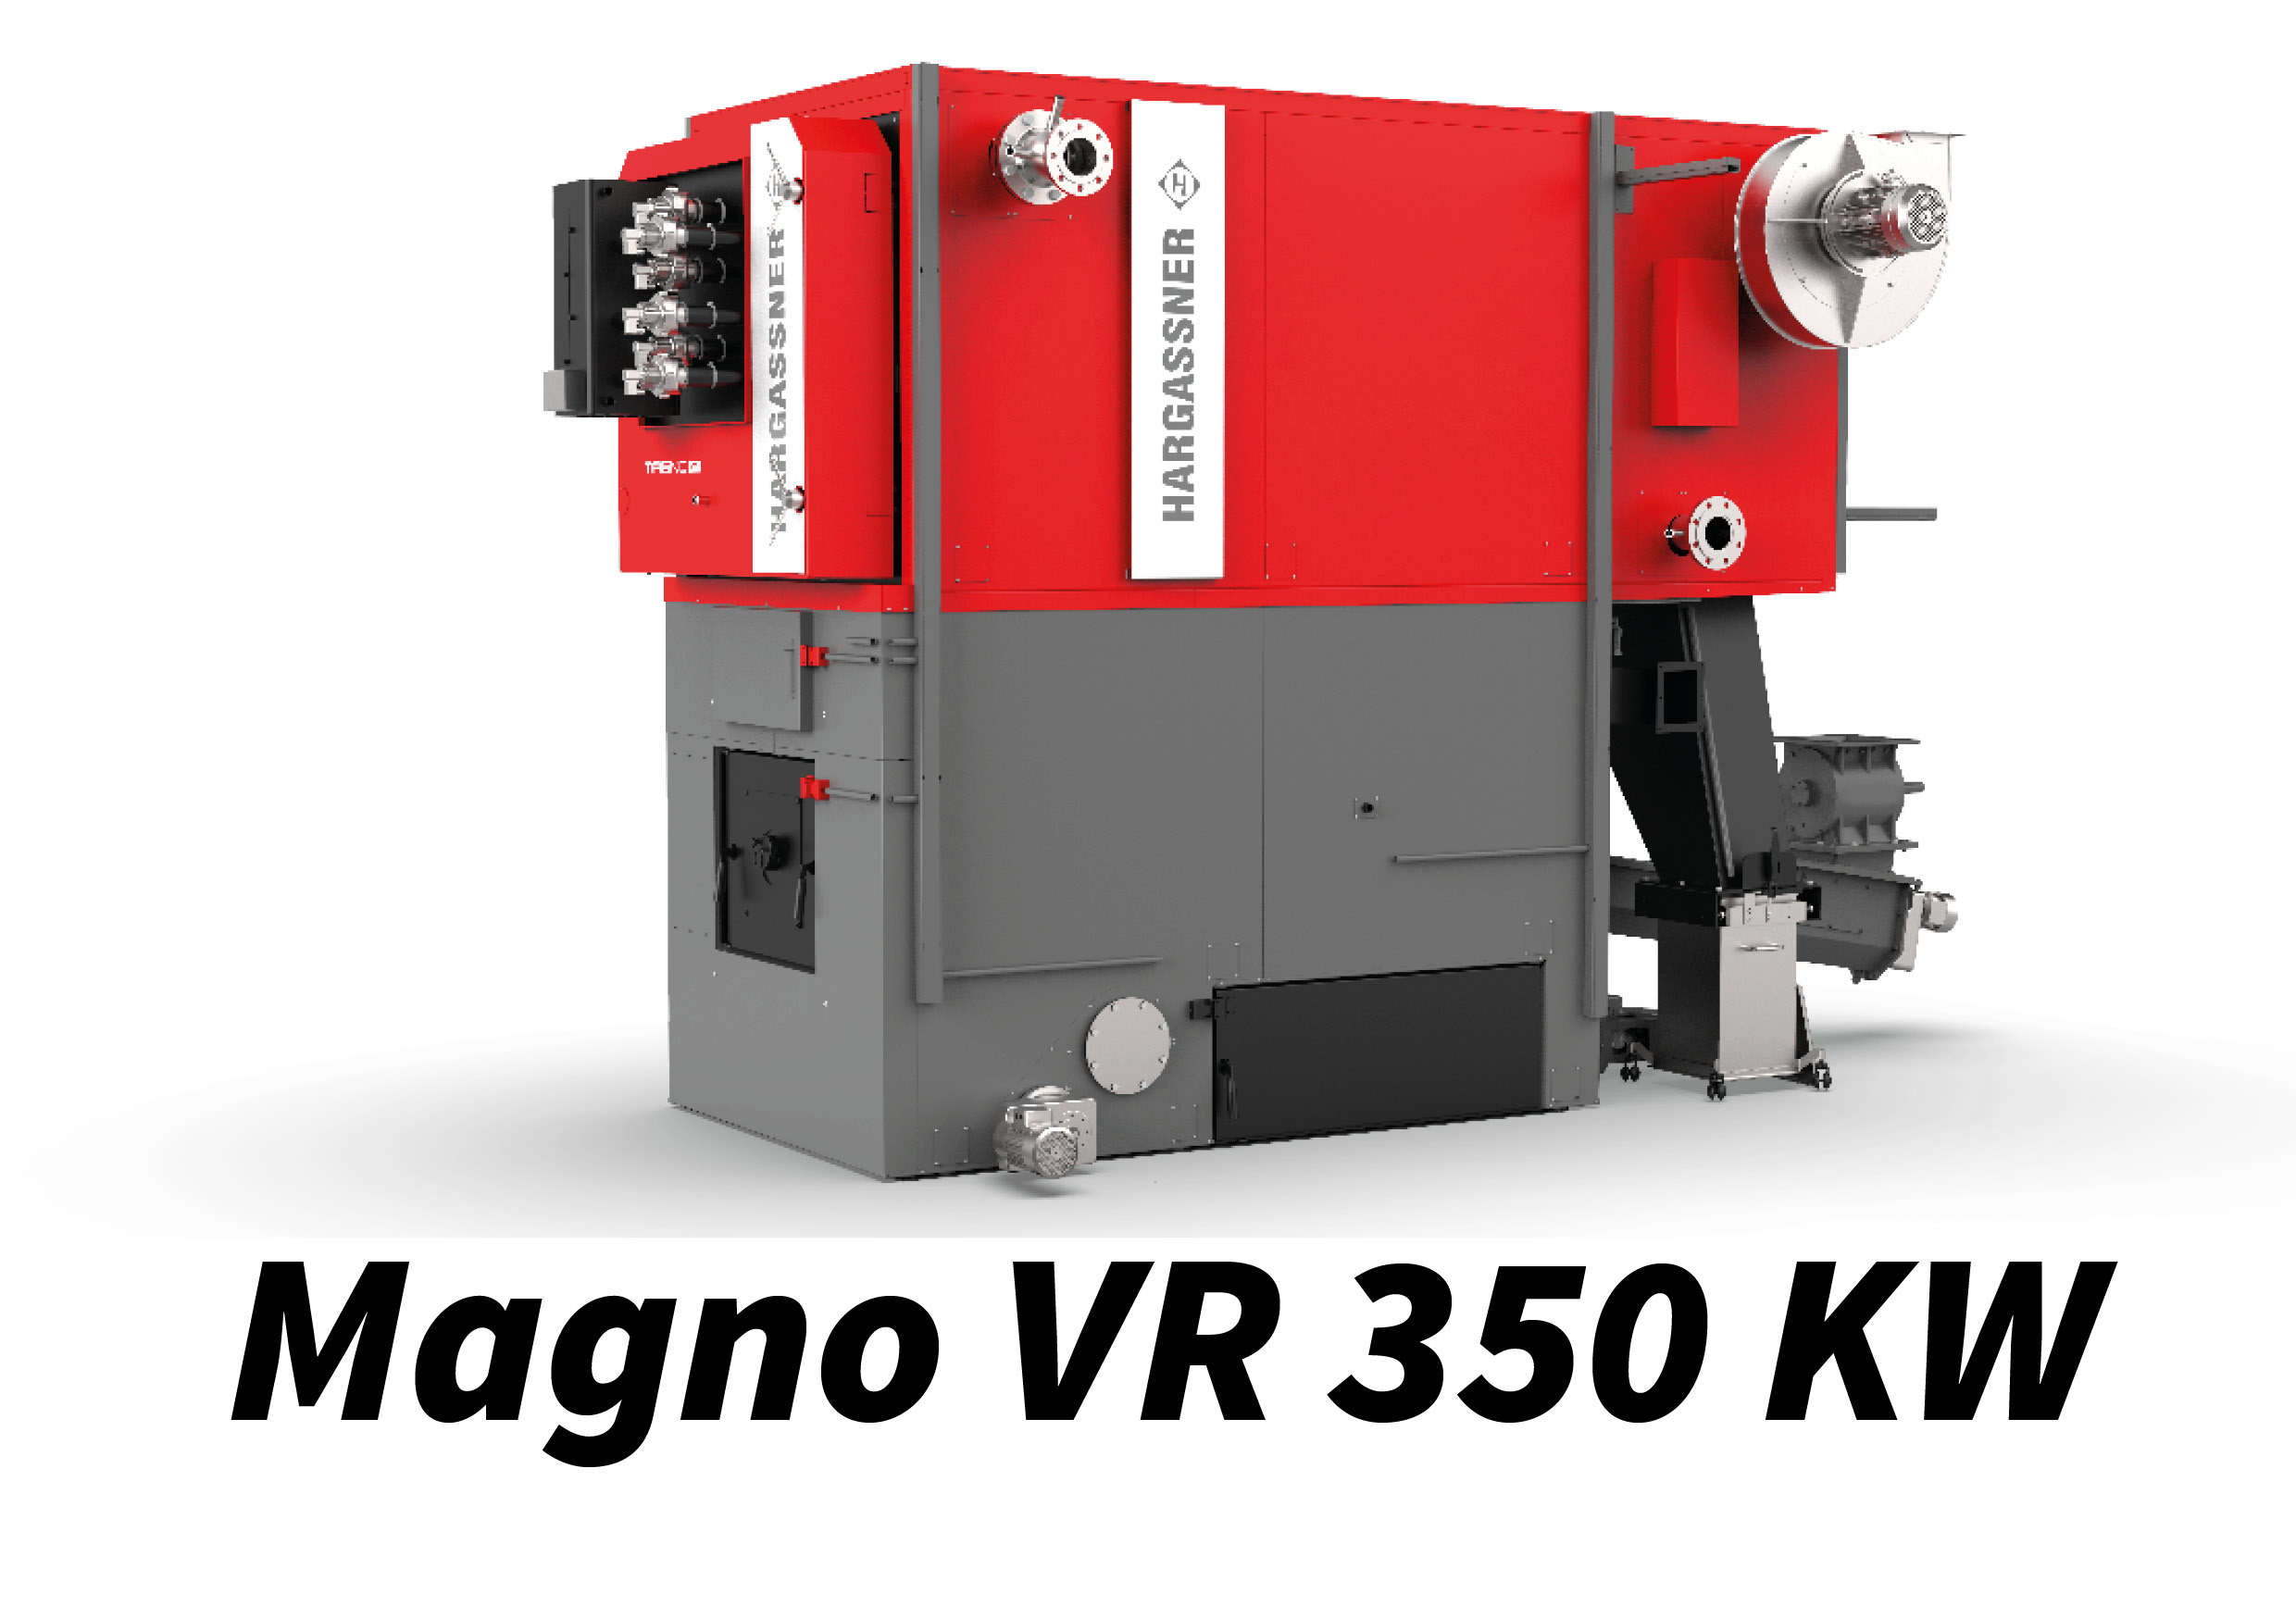 Magno VR 350 kW